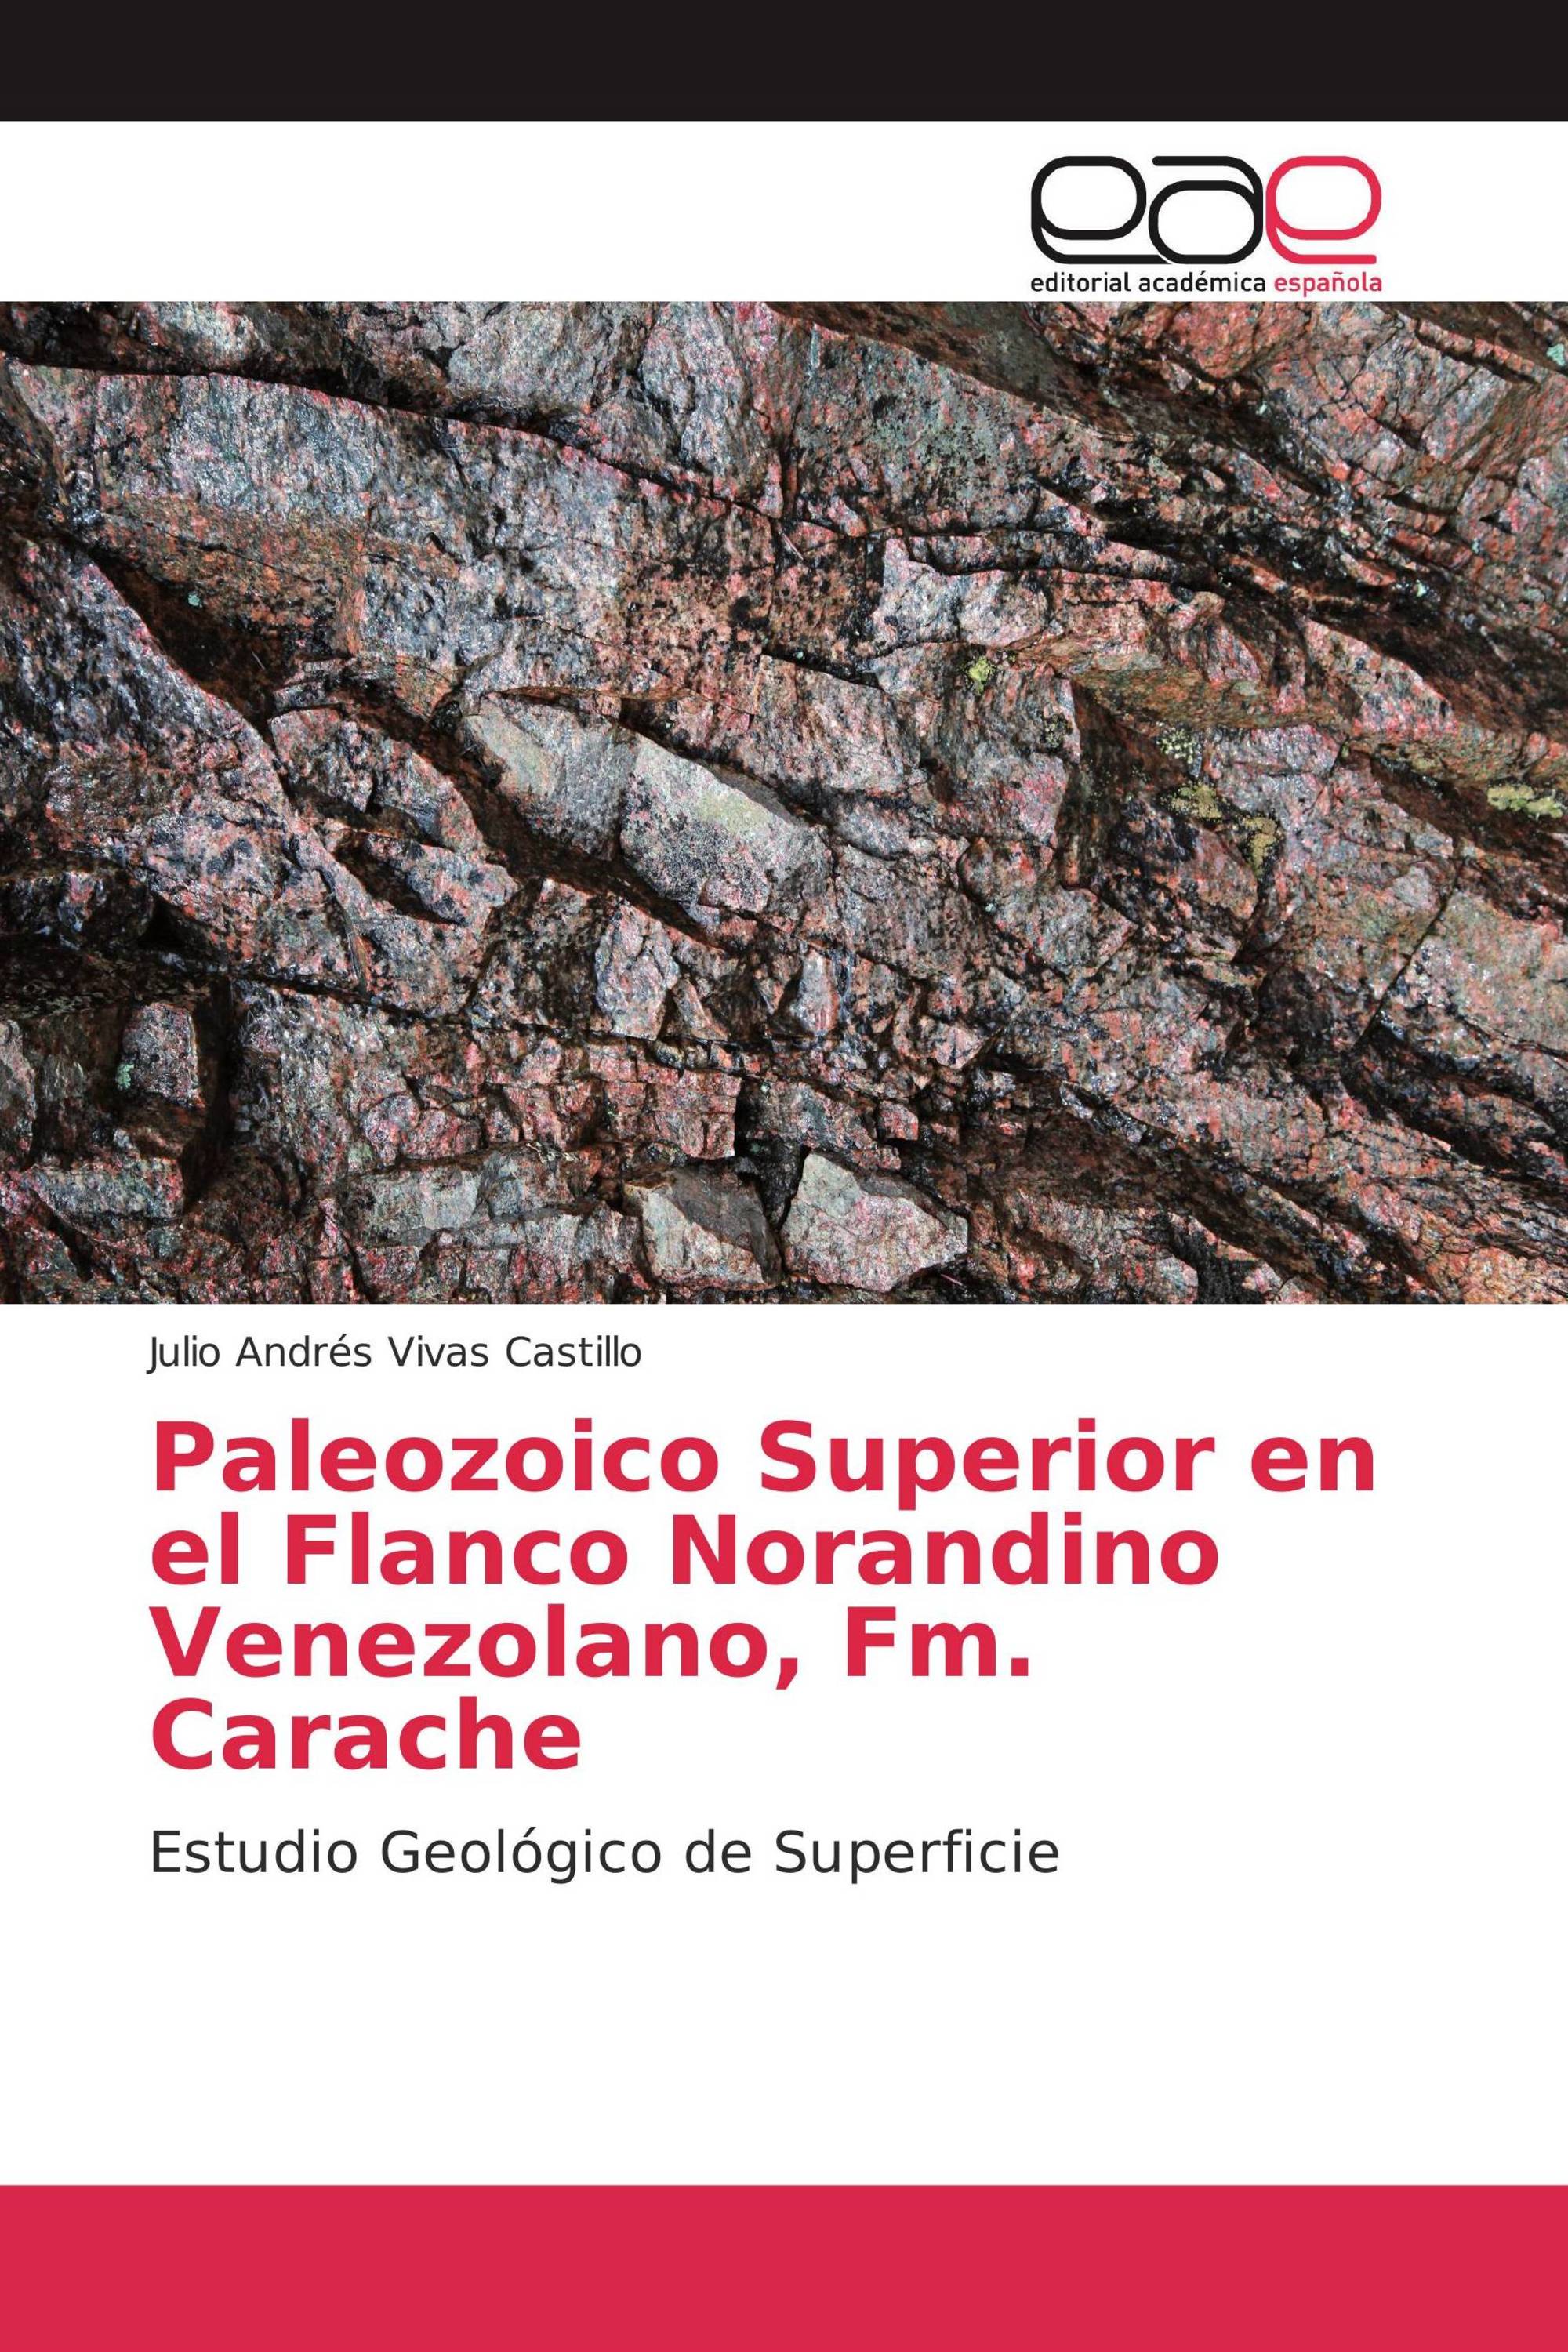 Paleozoico Superior en el Flanco Norandino Venezolano, Fm. Carache